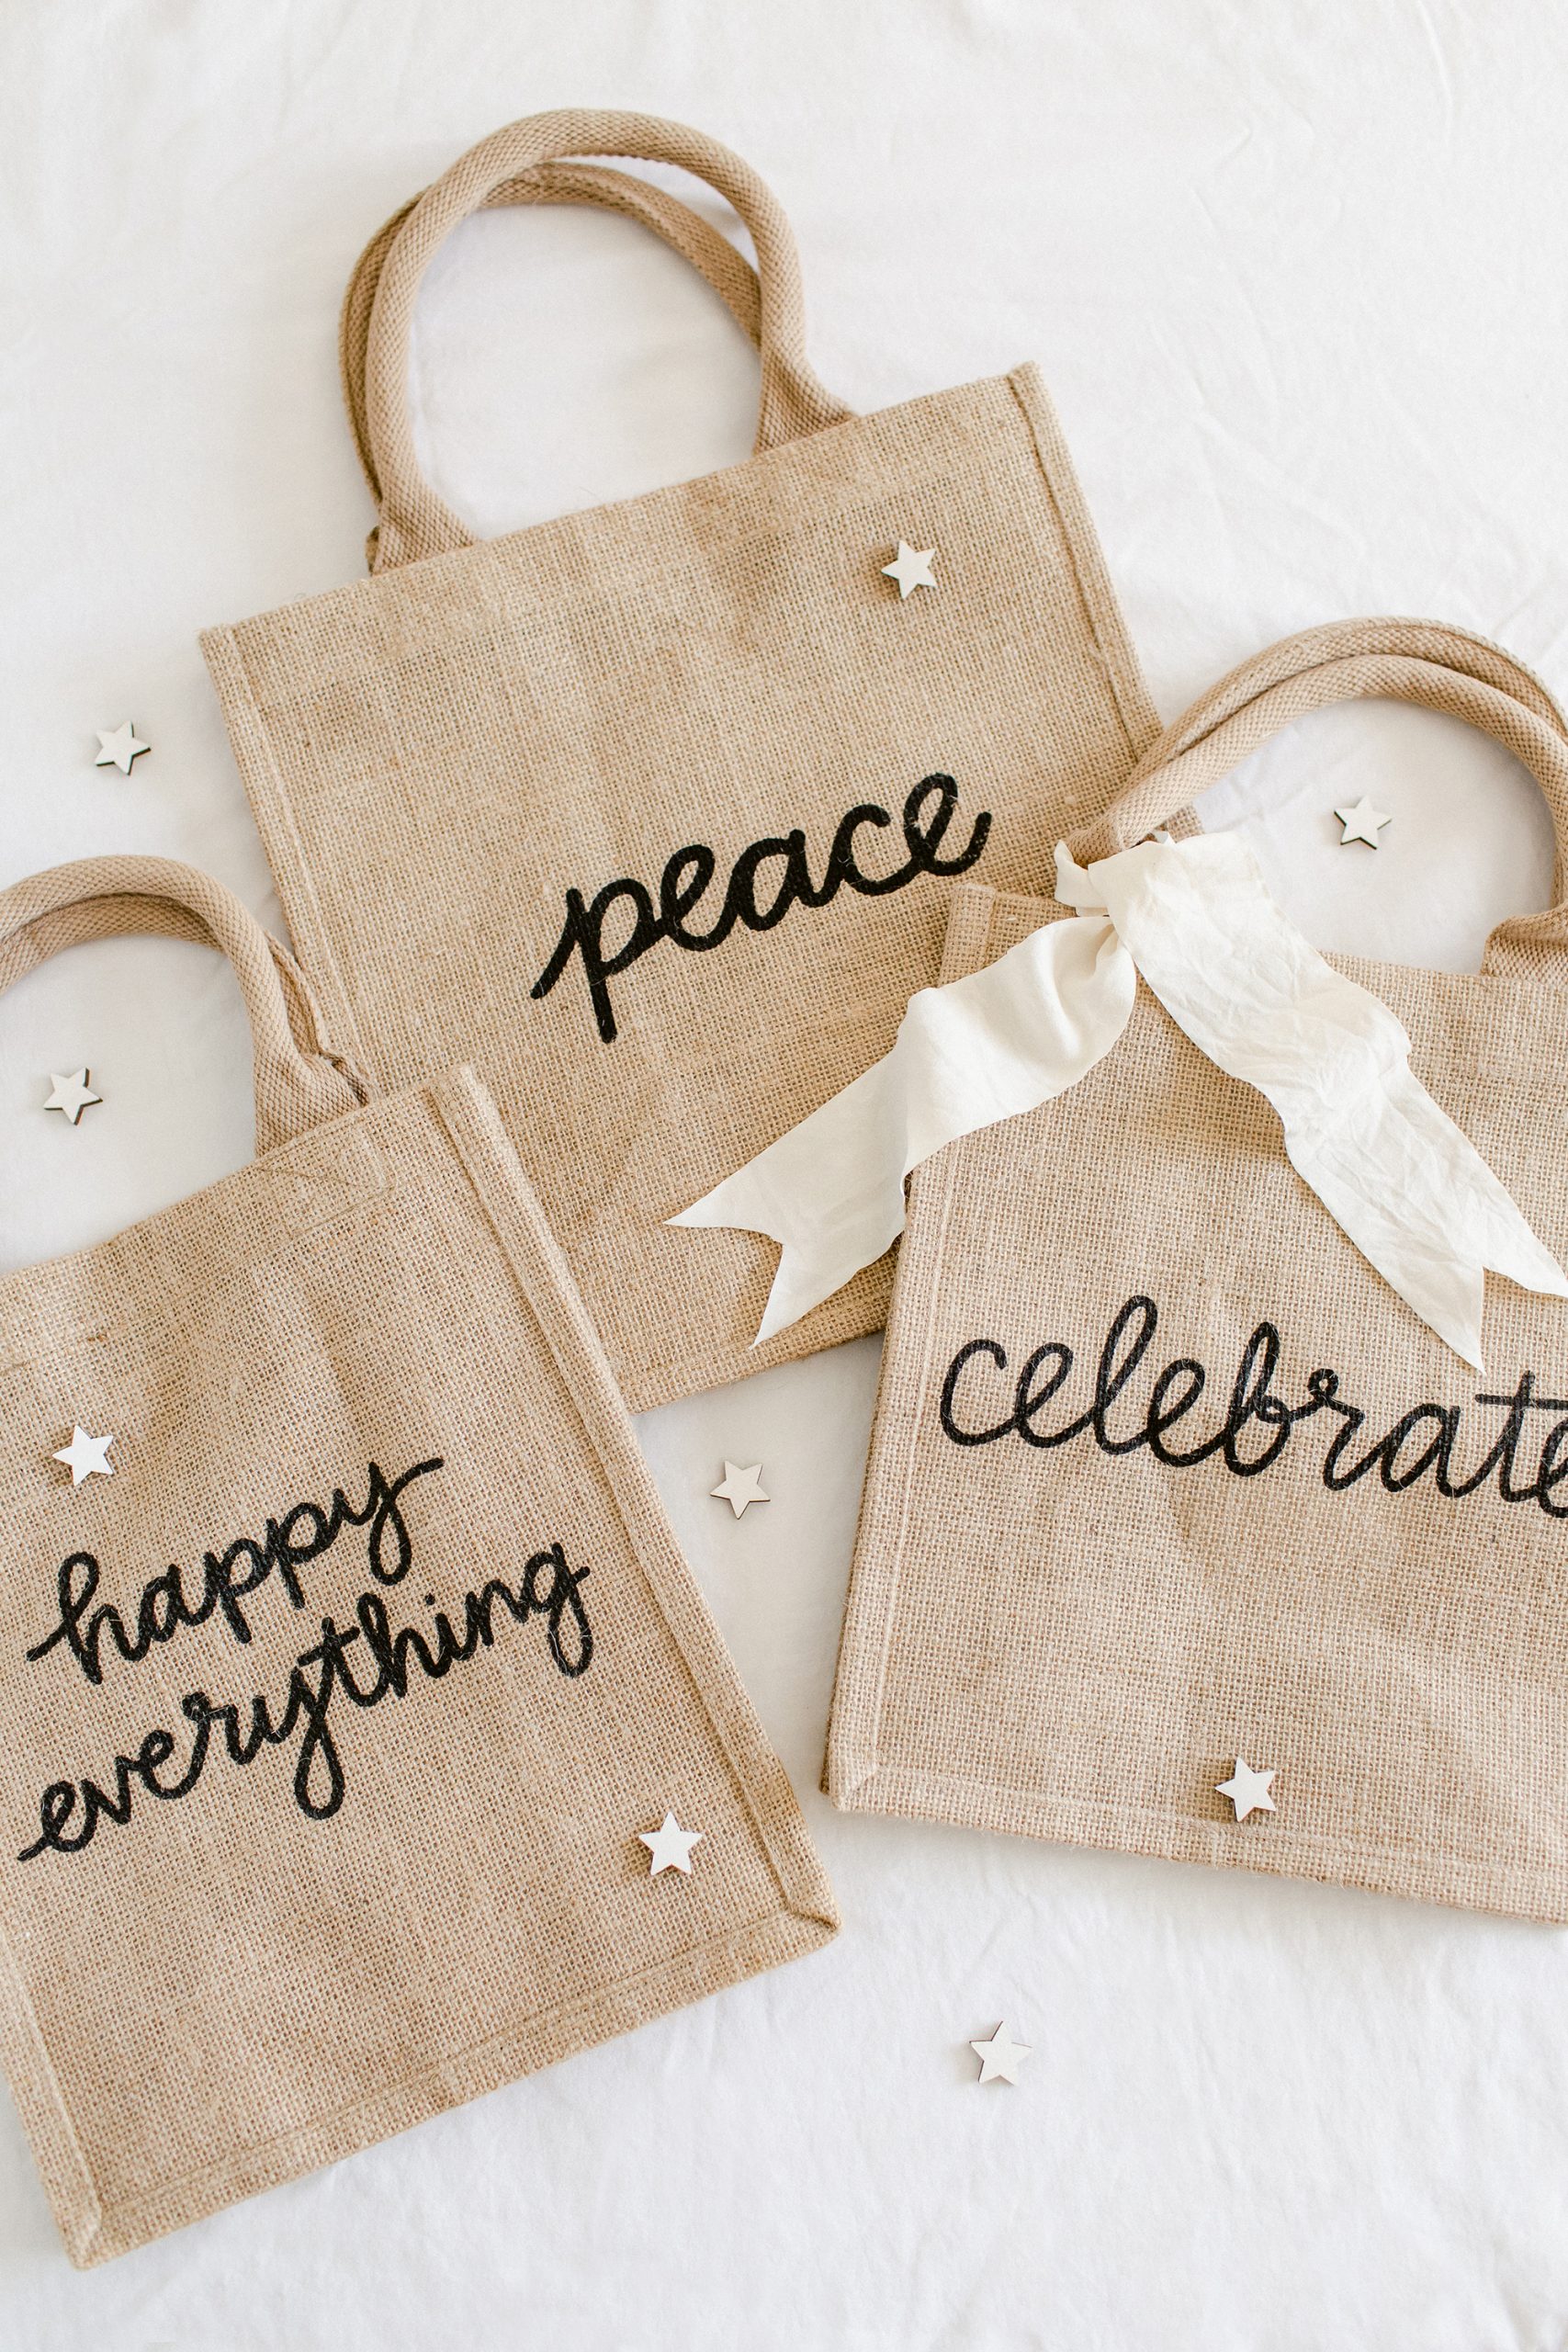 Shop My Lauren Conrad x Amazon Handmade Holiday Gift Guide